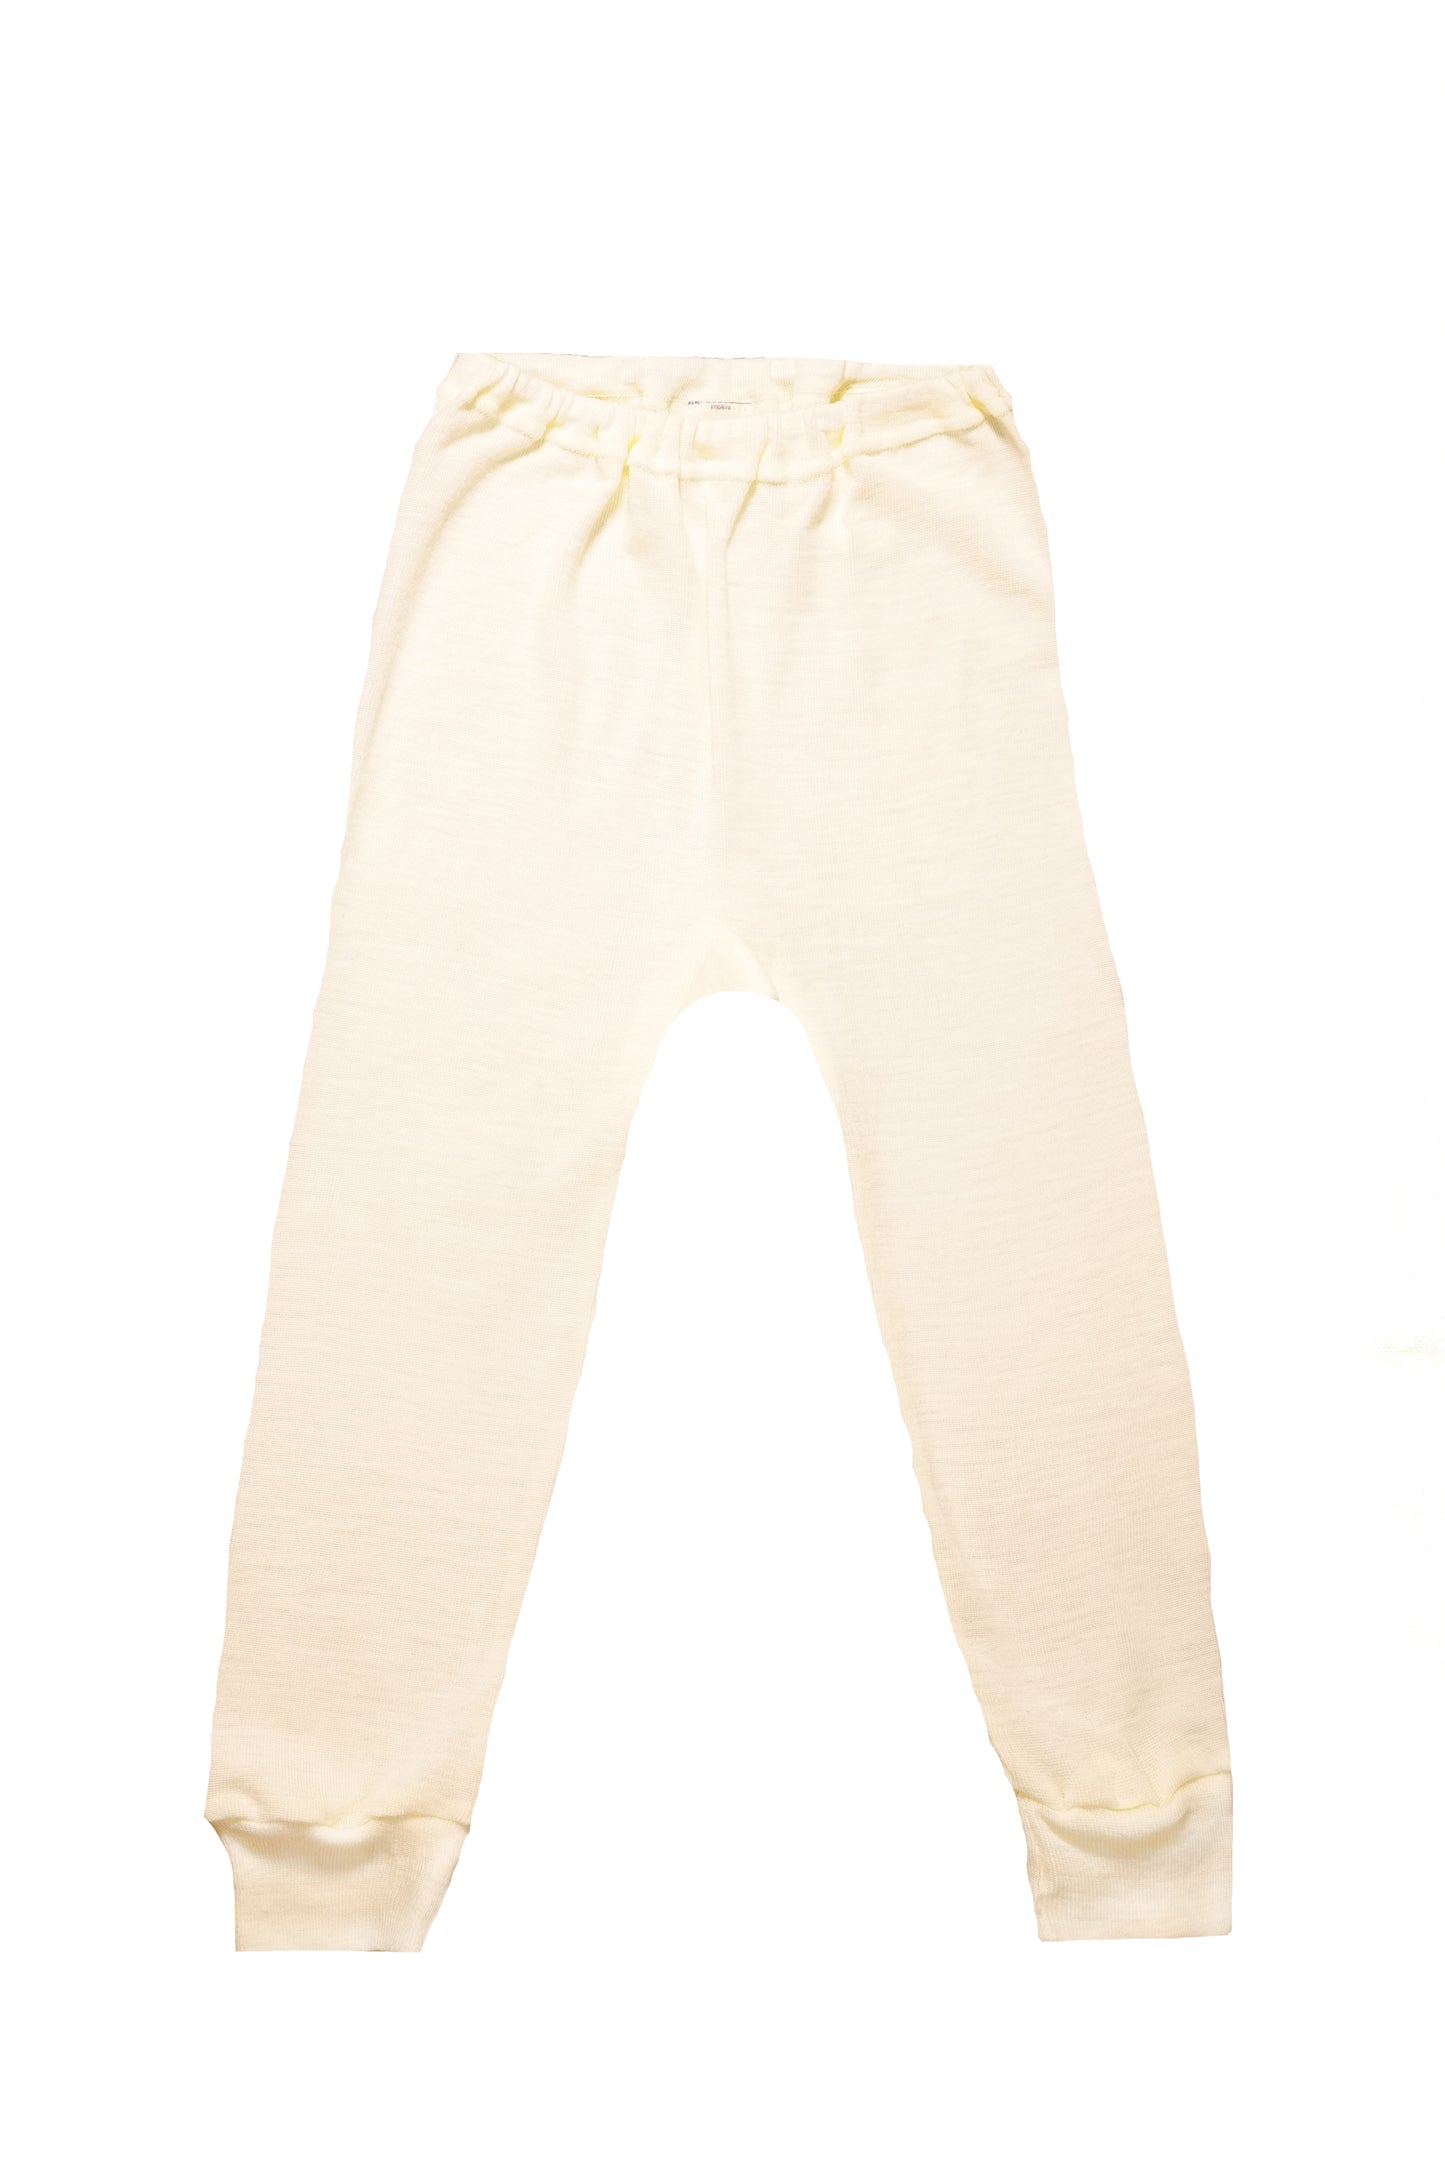 Cosilana Kinder-Unterhose lang Wolle/Seide